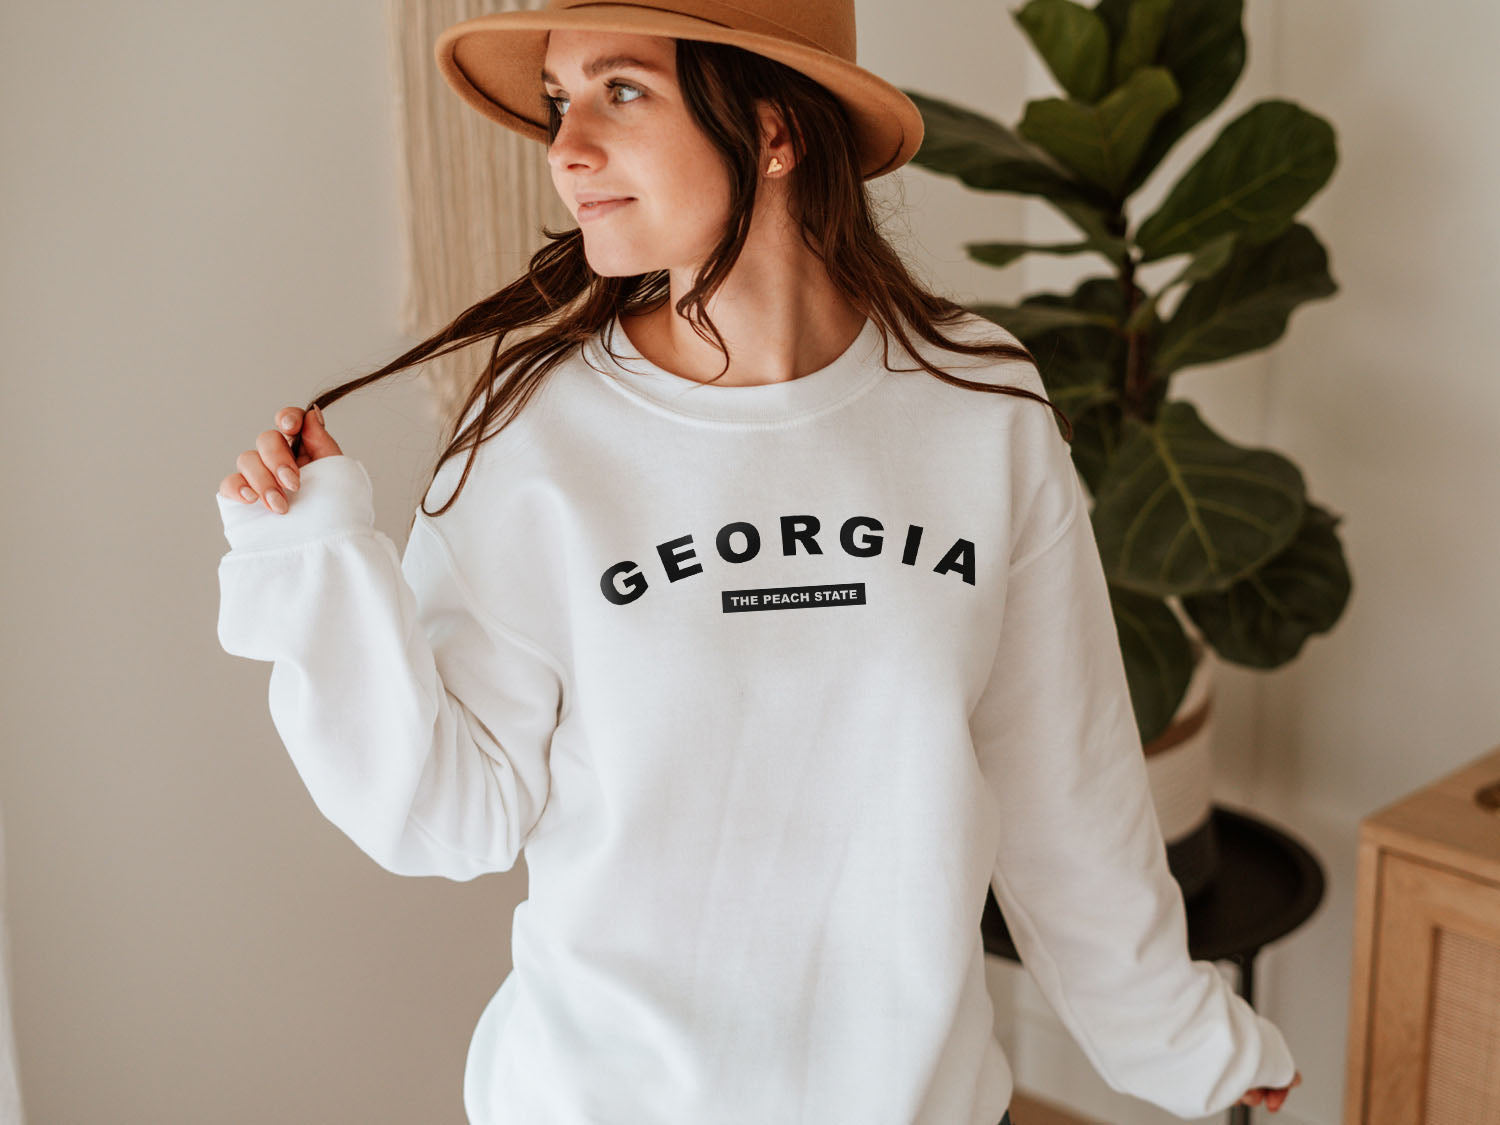 Georgia The Peach State Sweatshirt - United States Name & Slogan Minimal Design Printed Sweatshirt